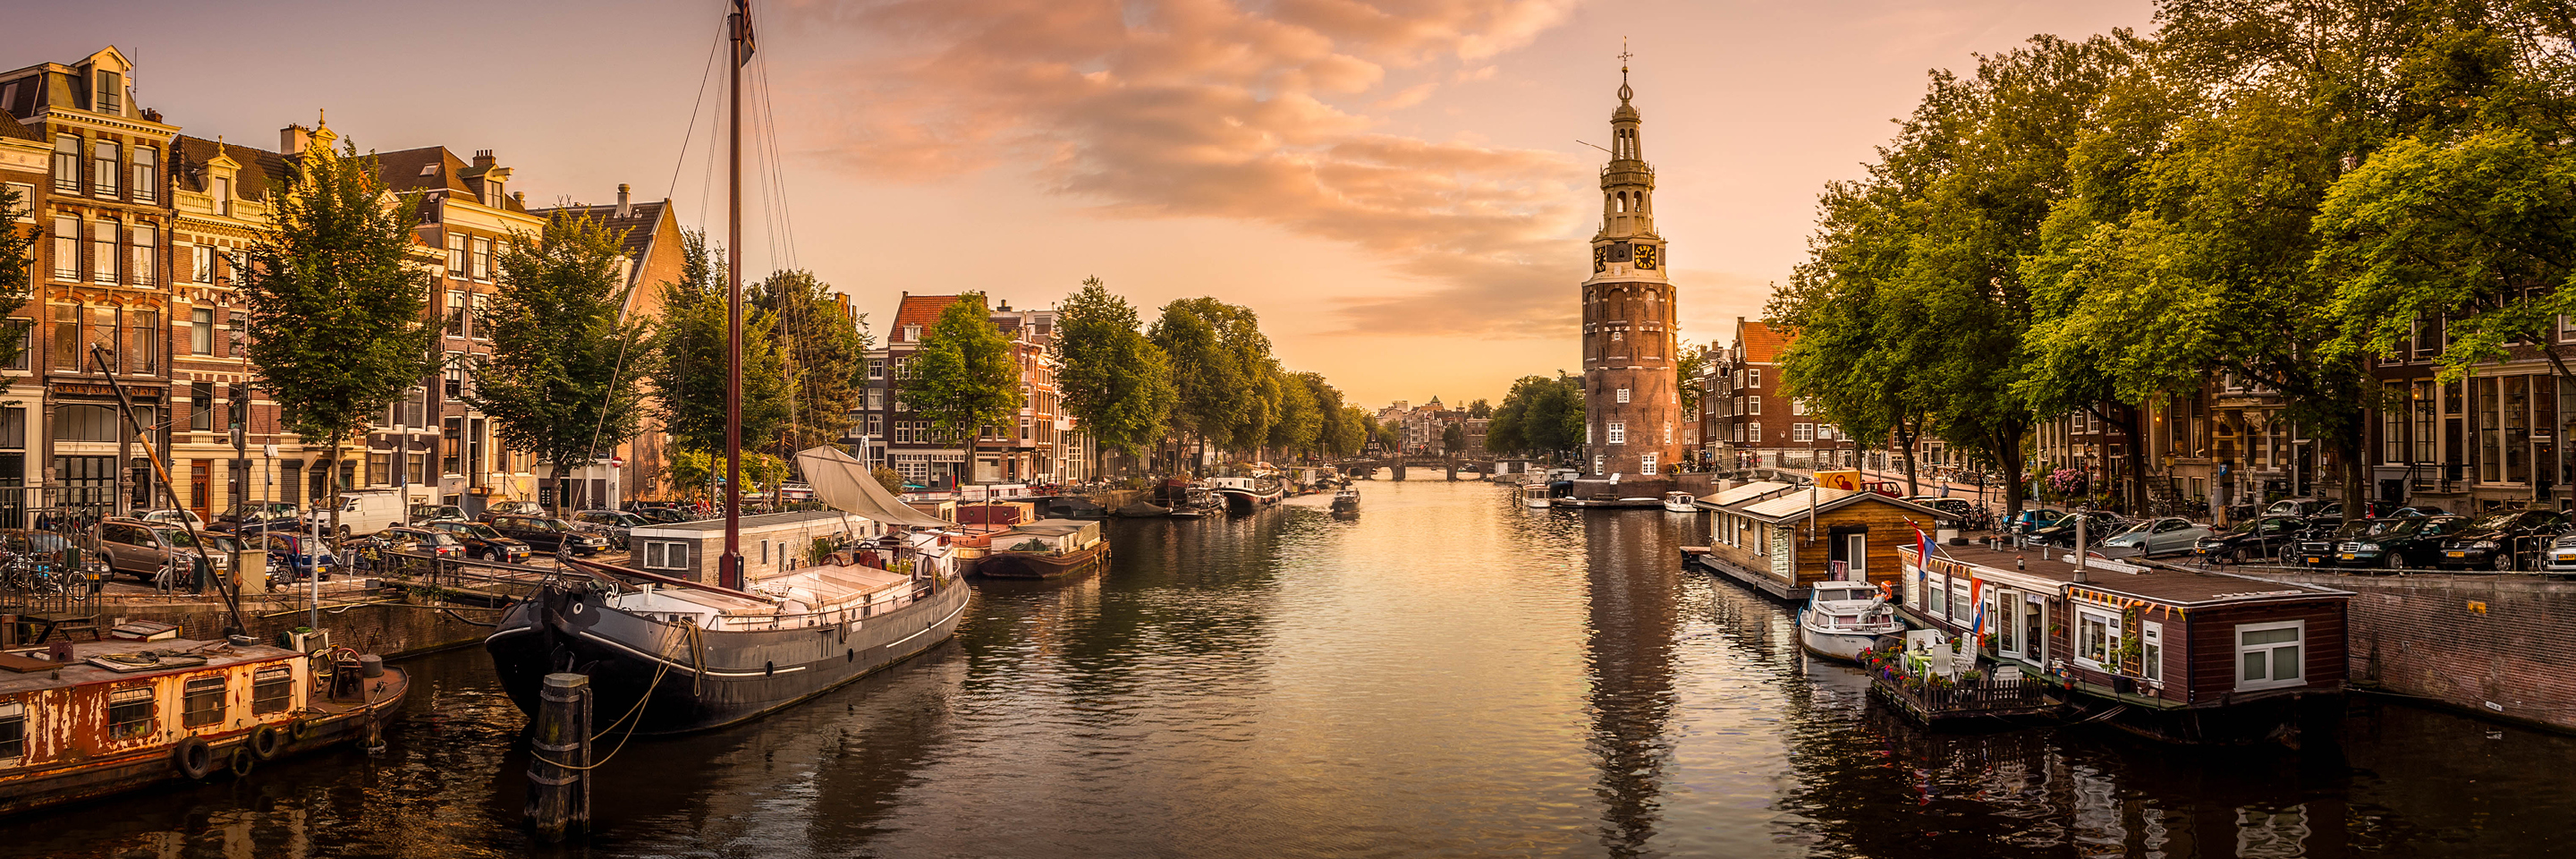 Grand Tulip Cruise of Holland & Belgium with 1 Night in Amsterdam